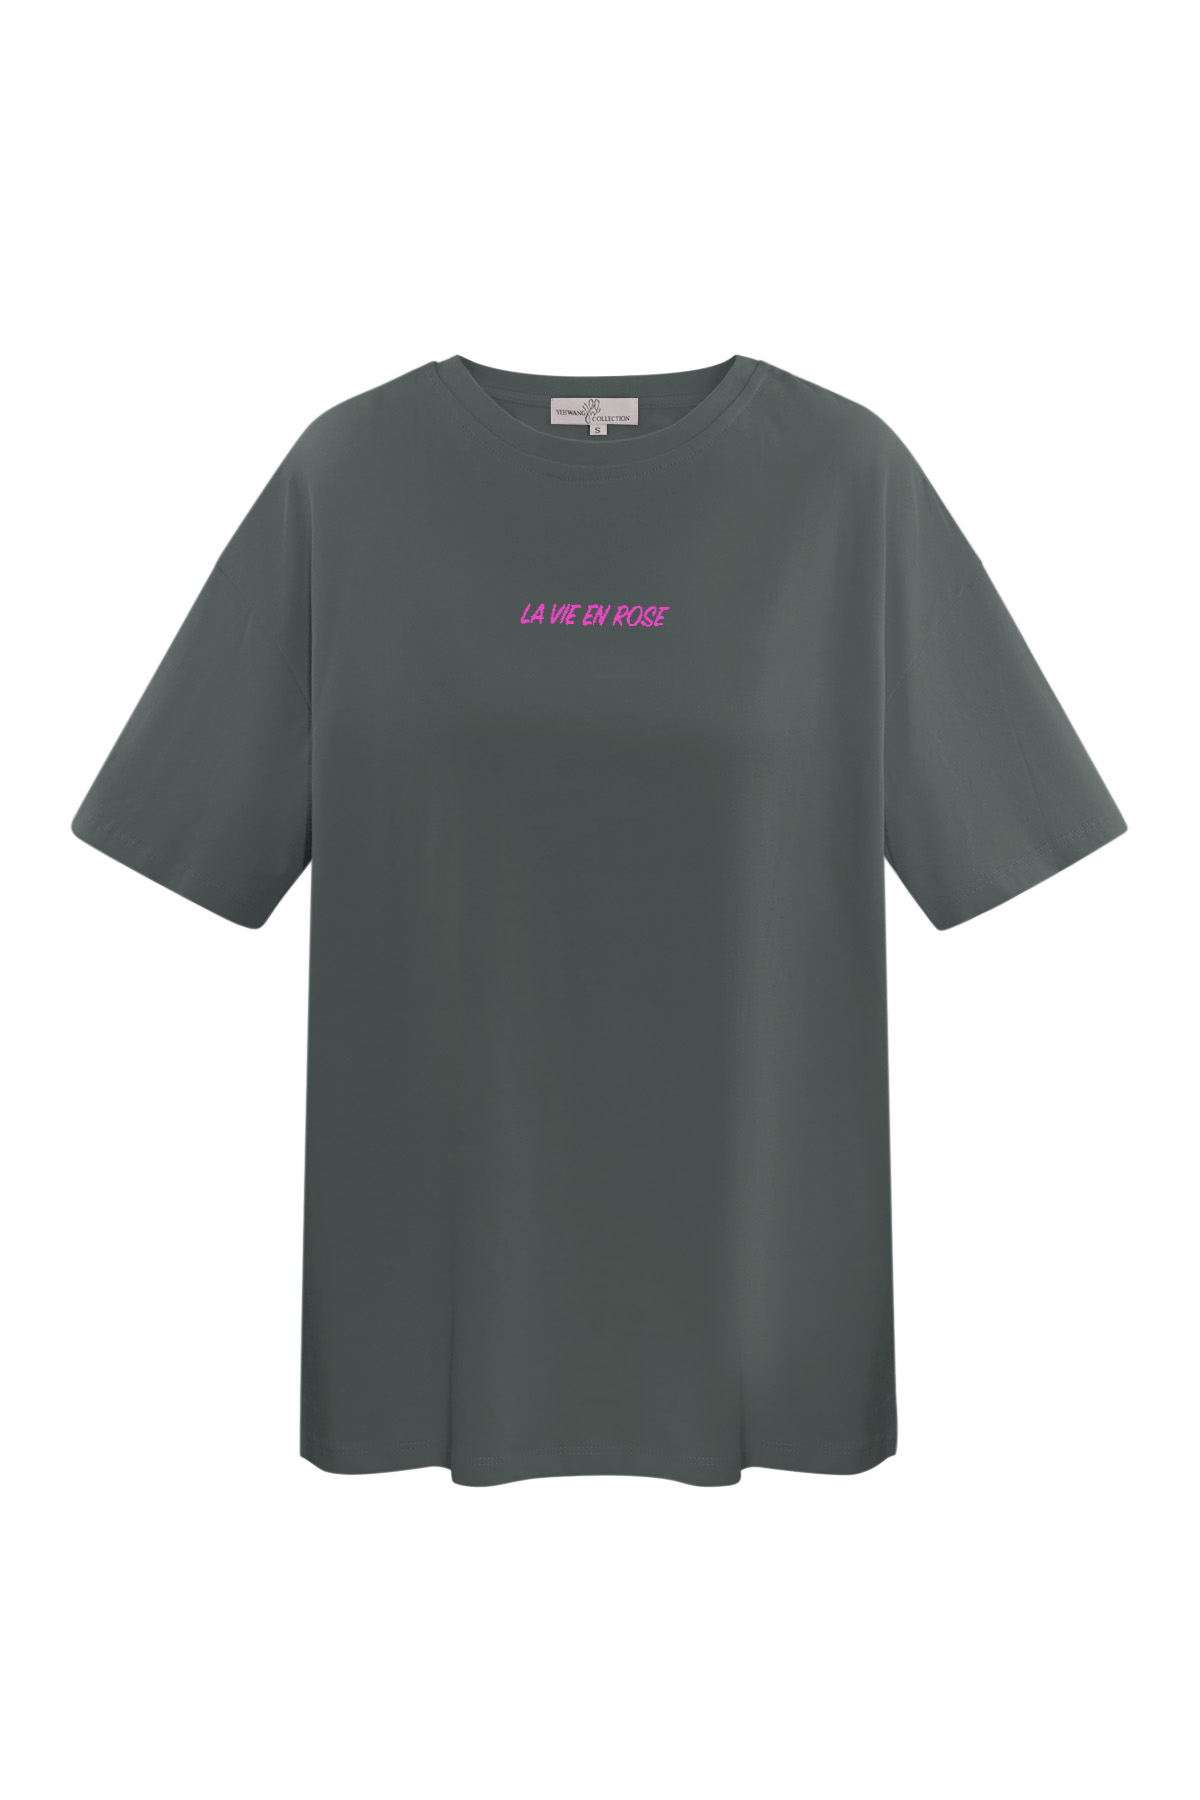 Camiseta la vie en rose - gris oscuro